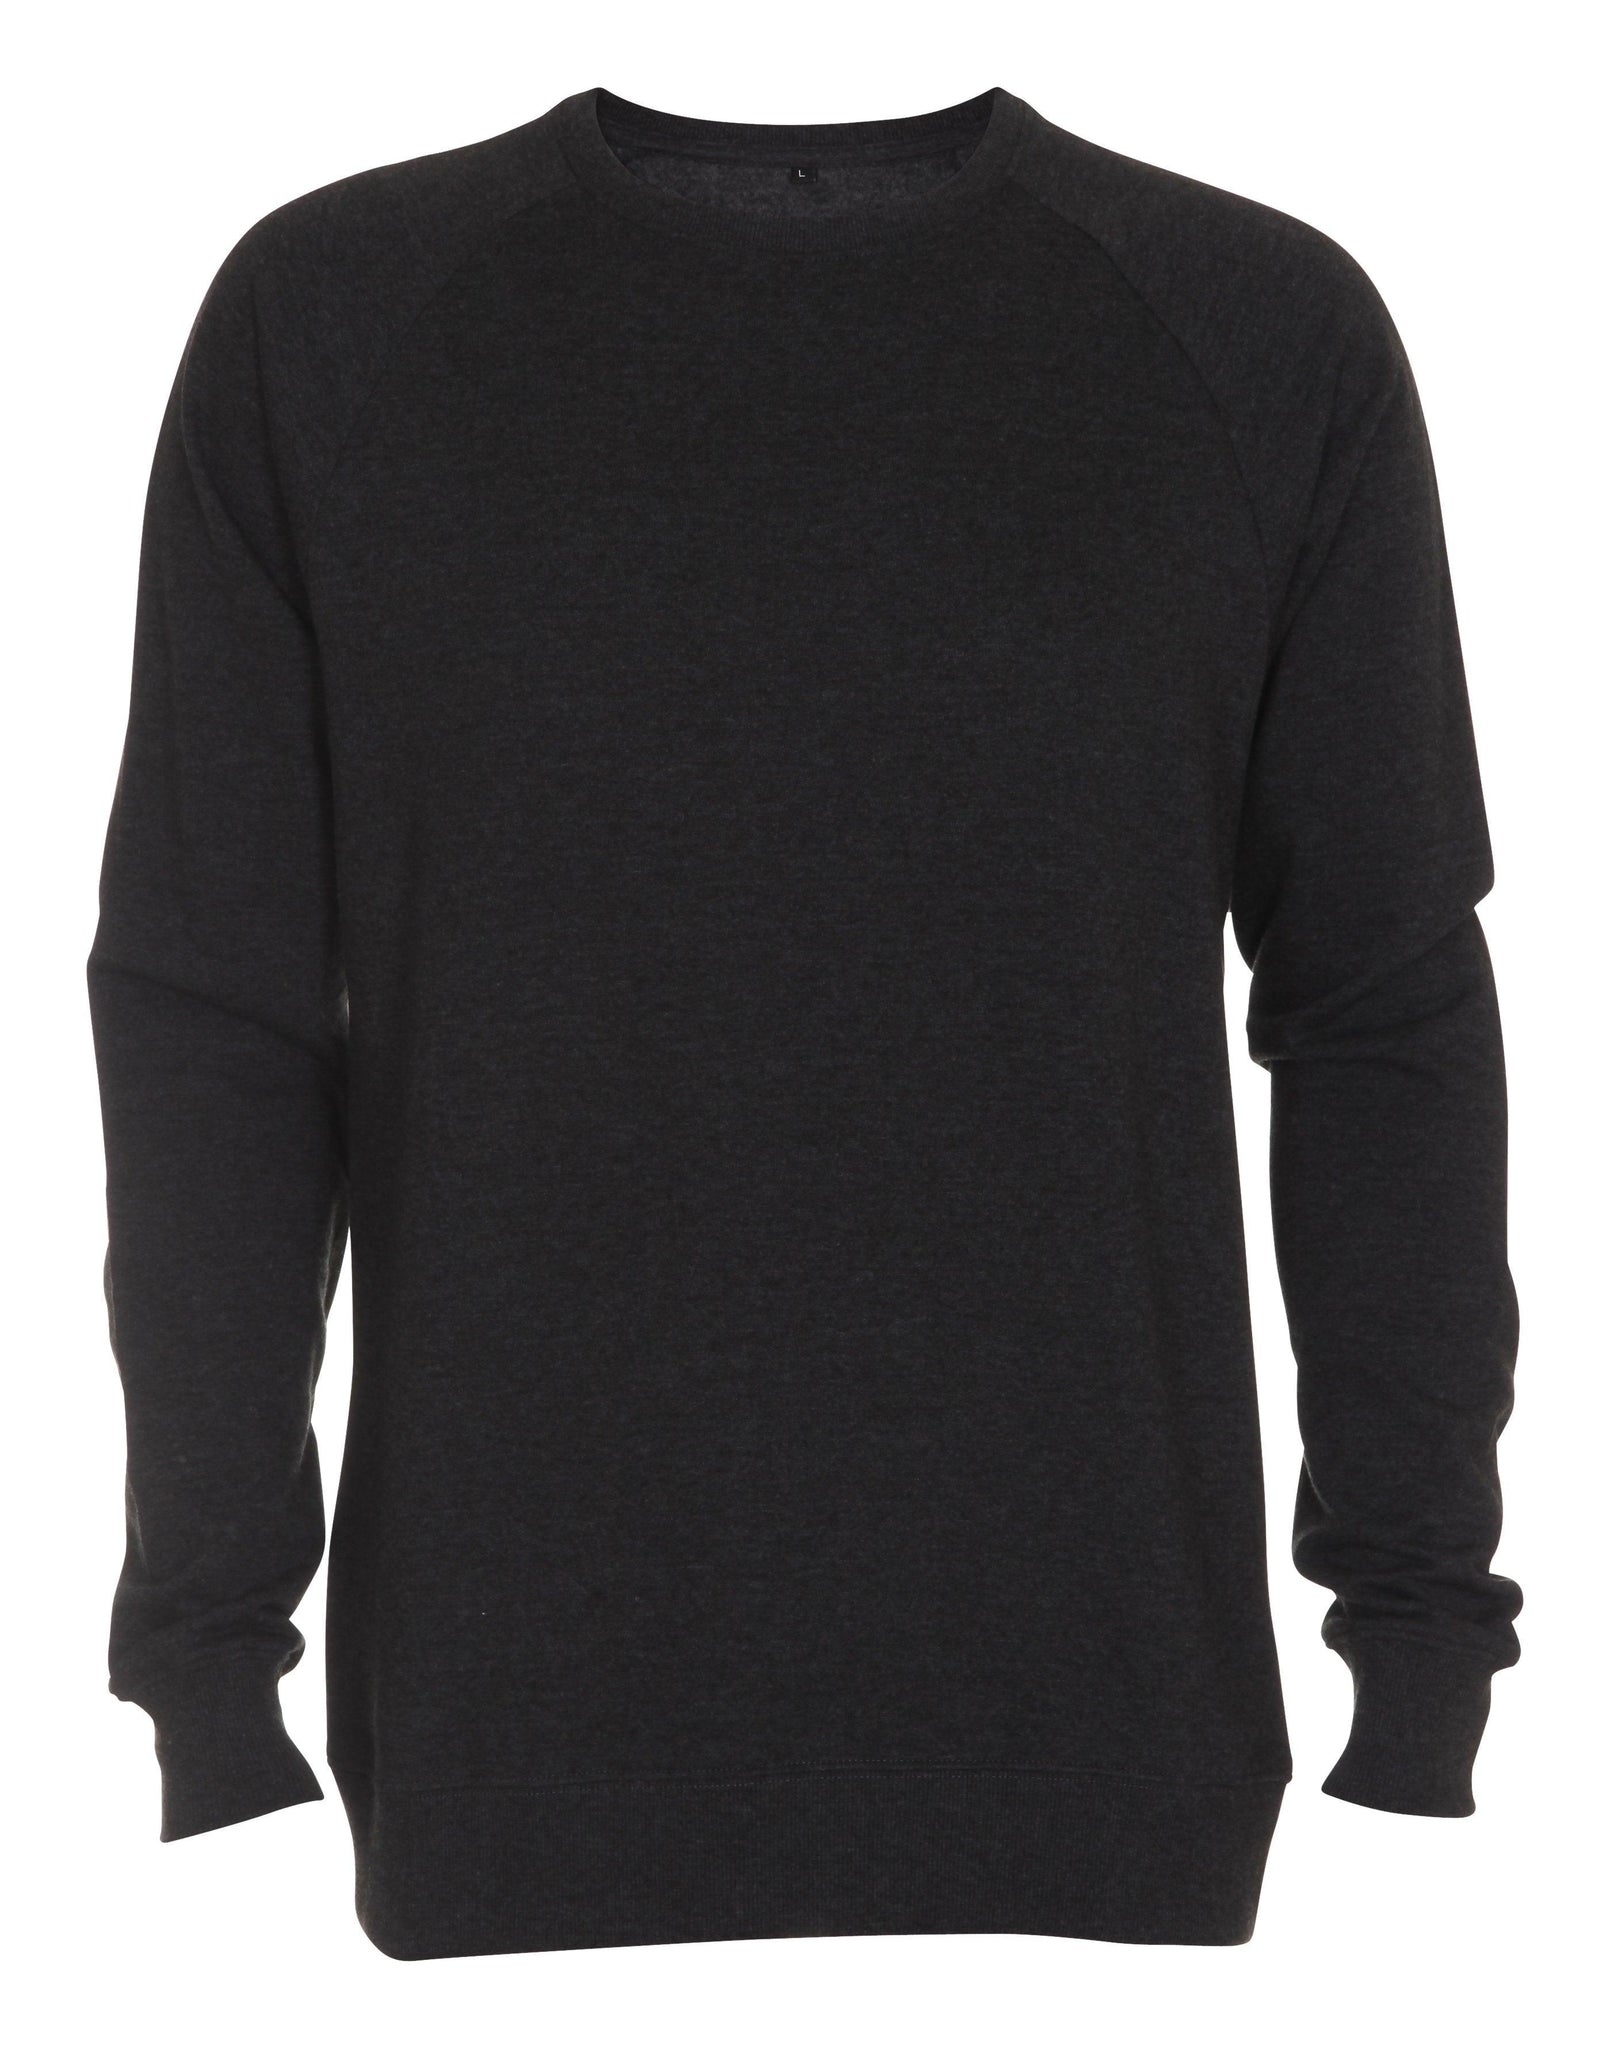 LabelFree MIAMI CREW NECK - Sweatshirts - JA Profil 